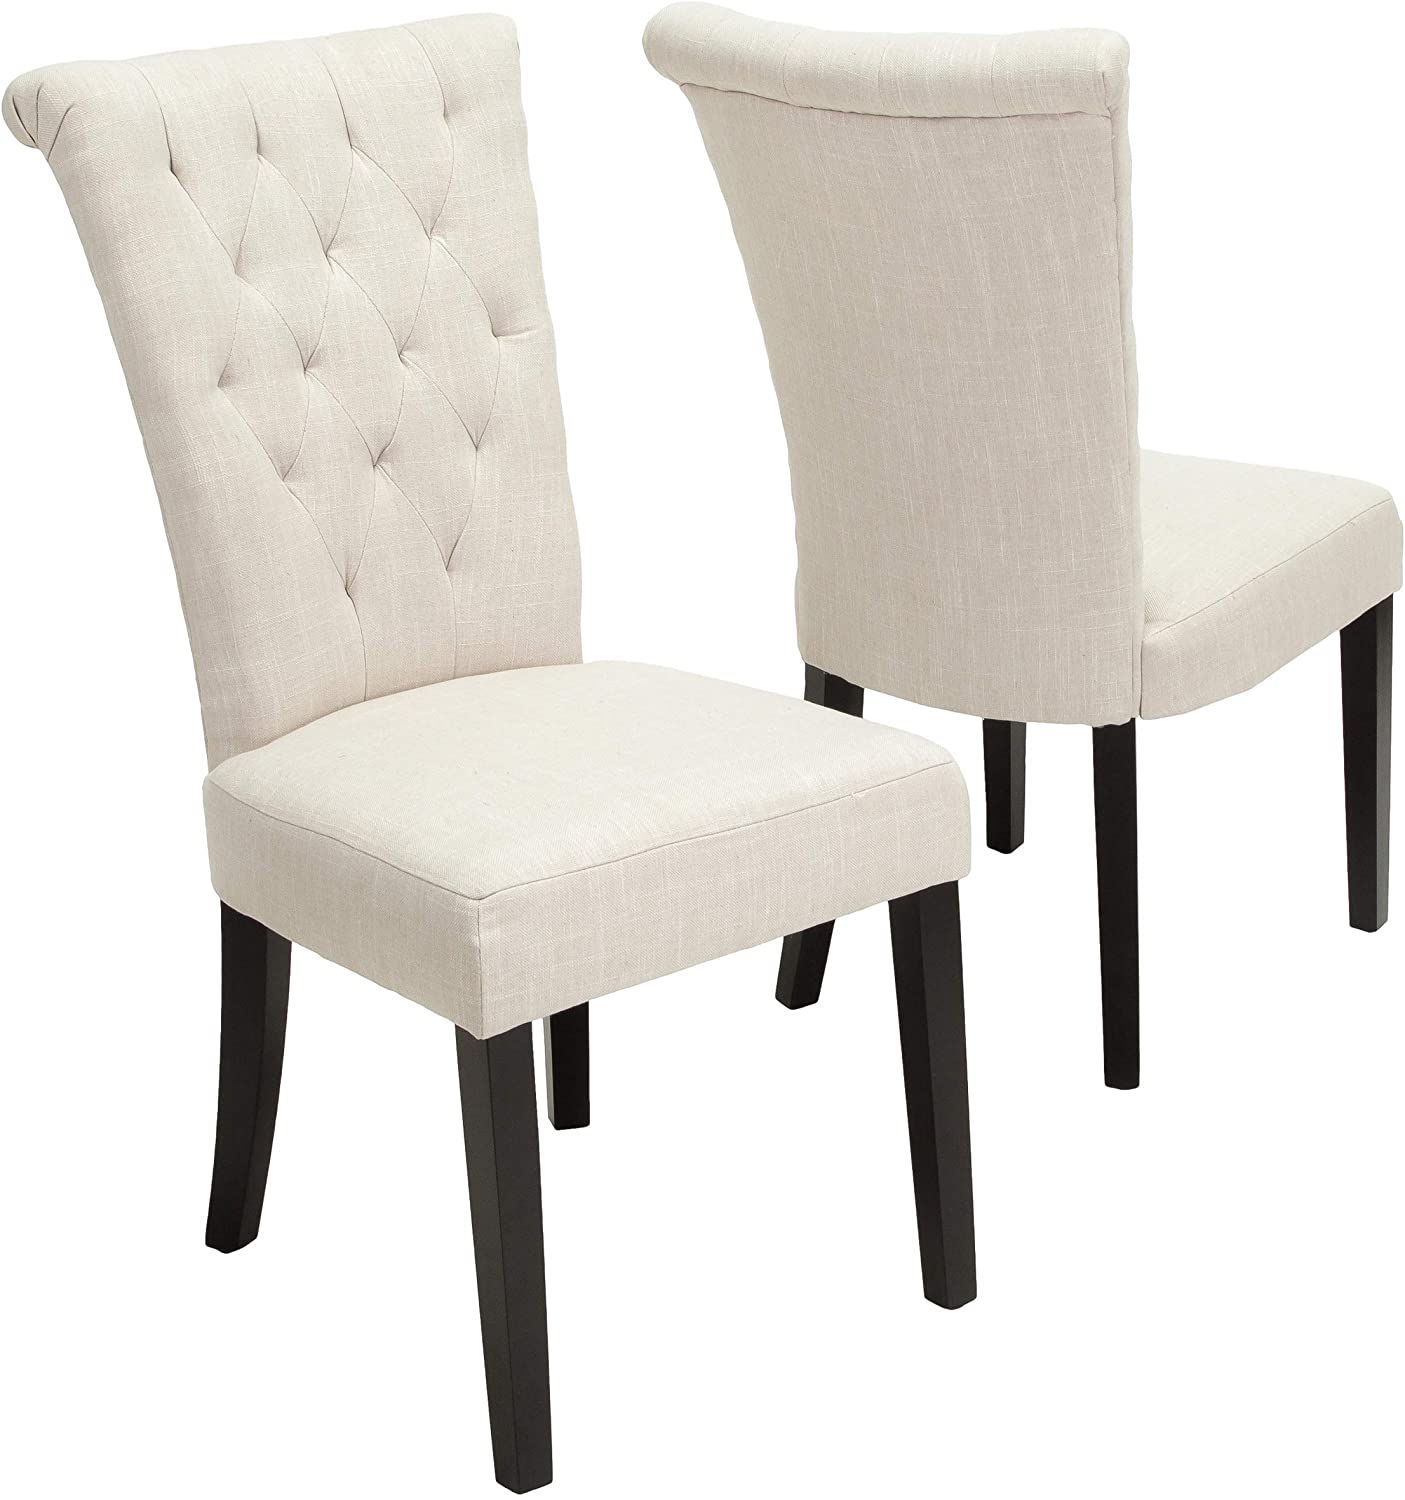 Venetian Dining Chairs, 2-Pcs Set